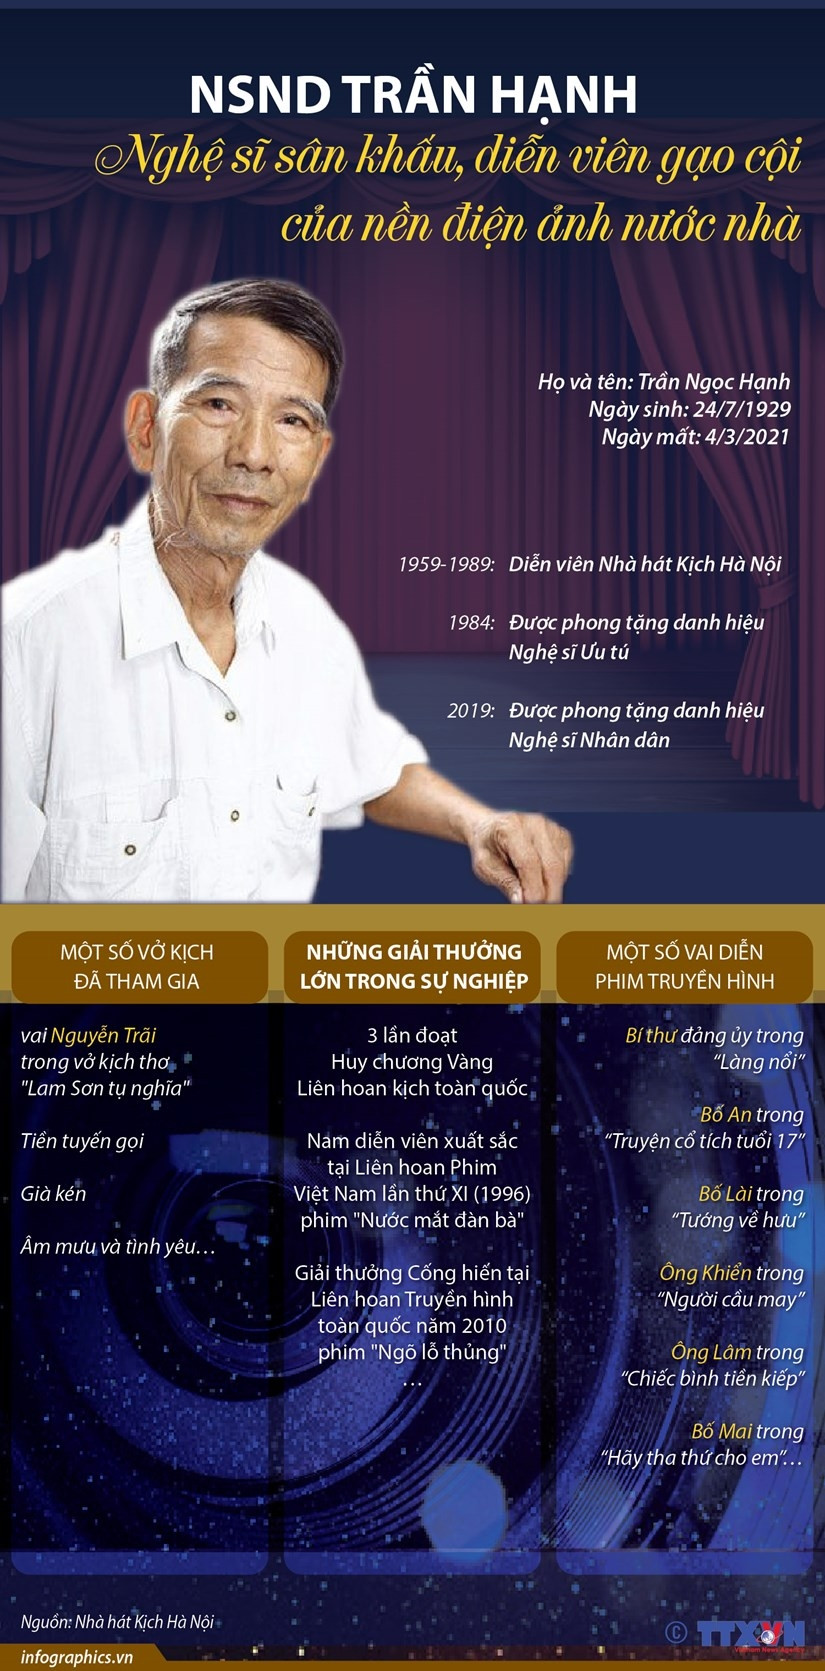 [Infographics] Cuoc doi va su nghiep cua Nghe sy Nhan dan Tran Hanh hinh anh 1